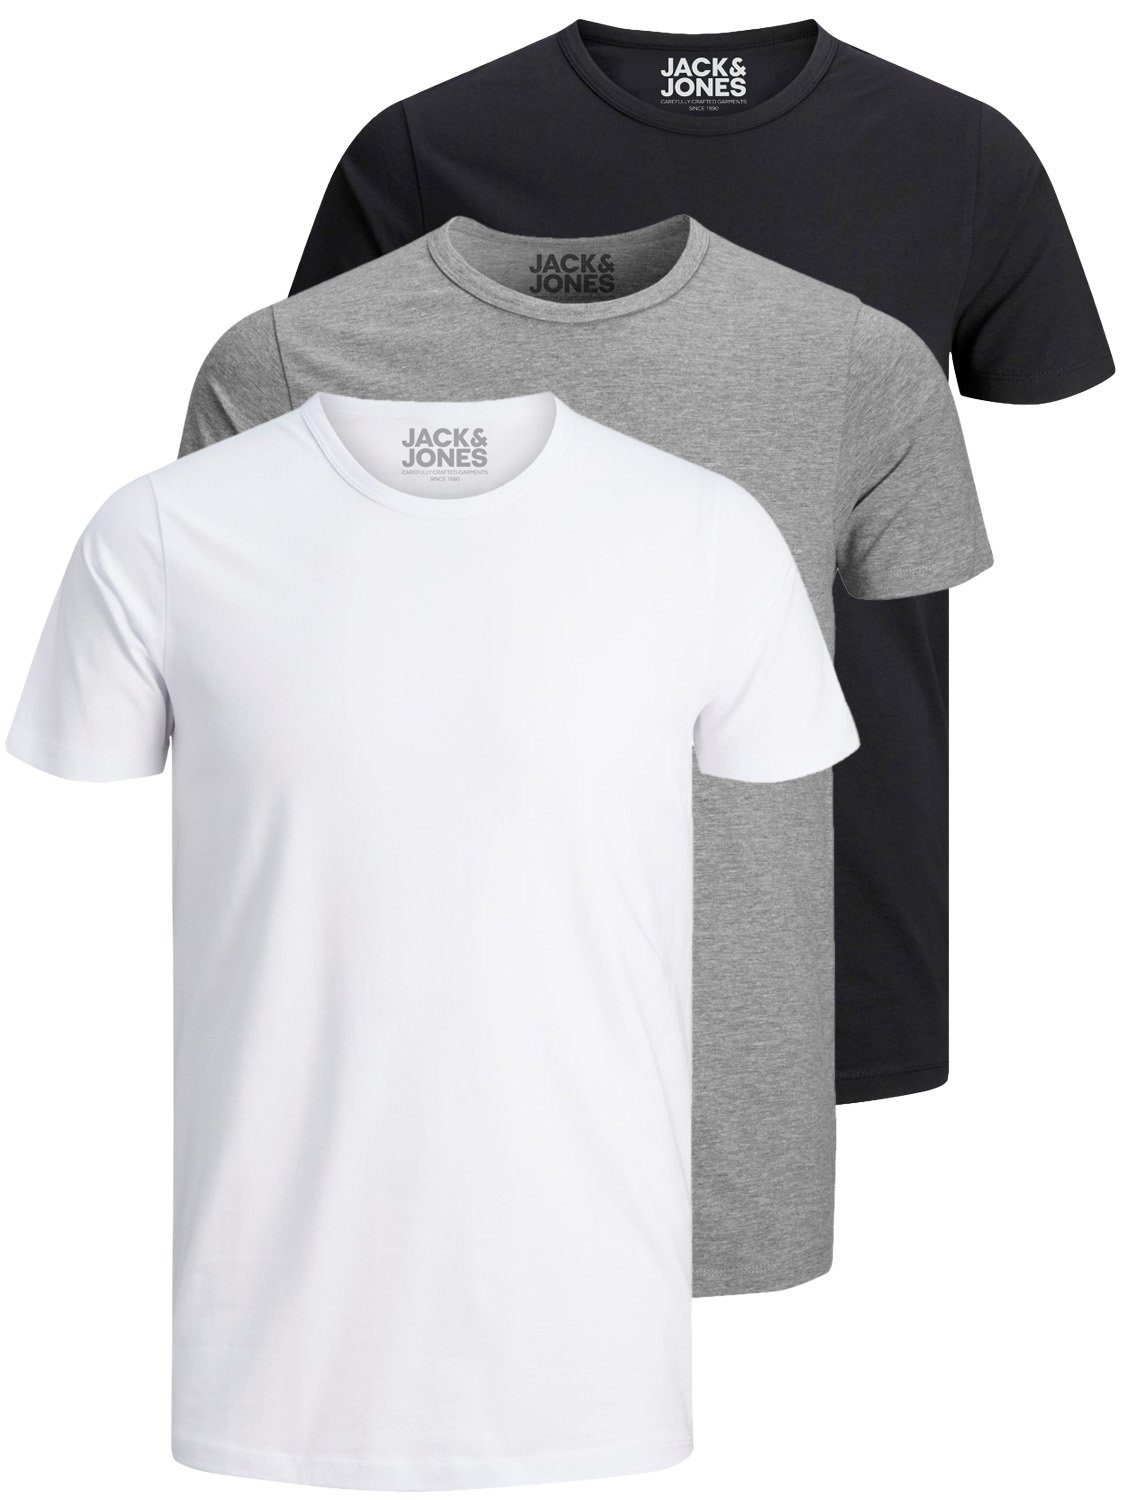 Jack & Jones Herren T-Shirt 3er Pack Basic Rundhals Shirt kurzarm Stretch NEU 